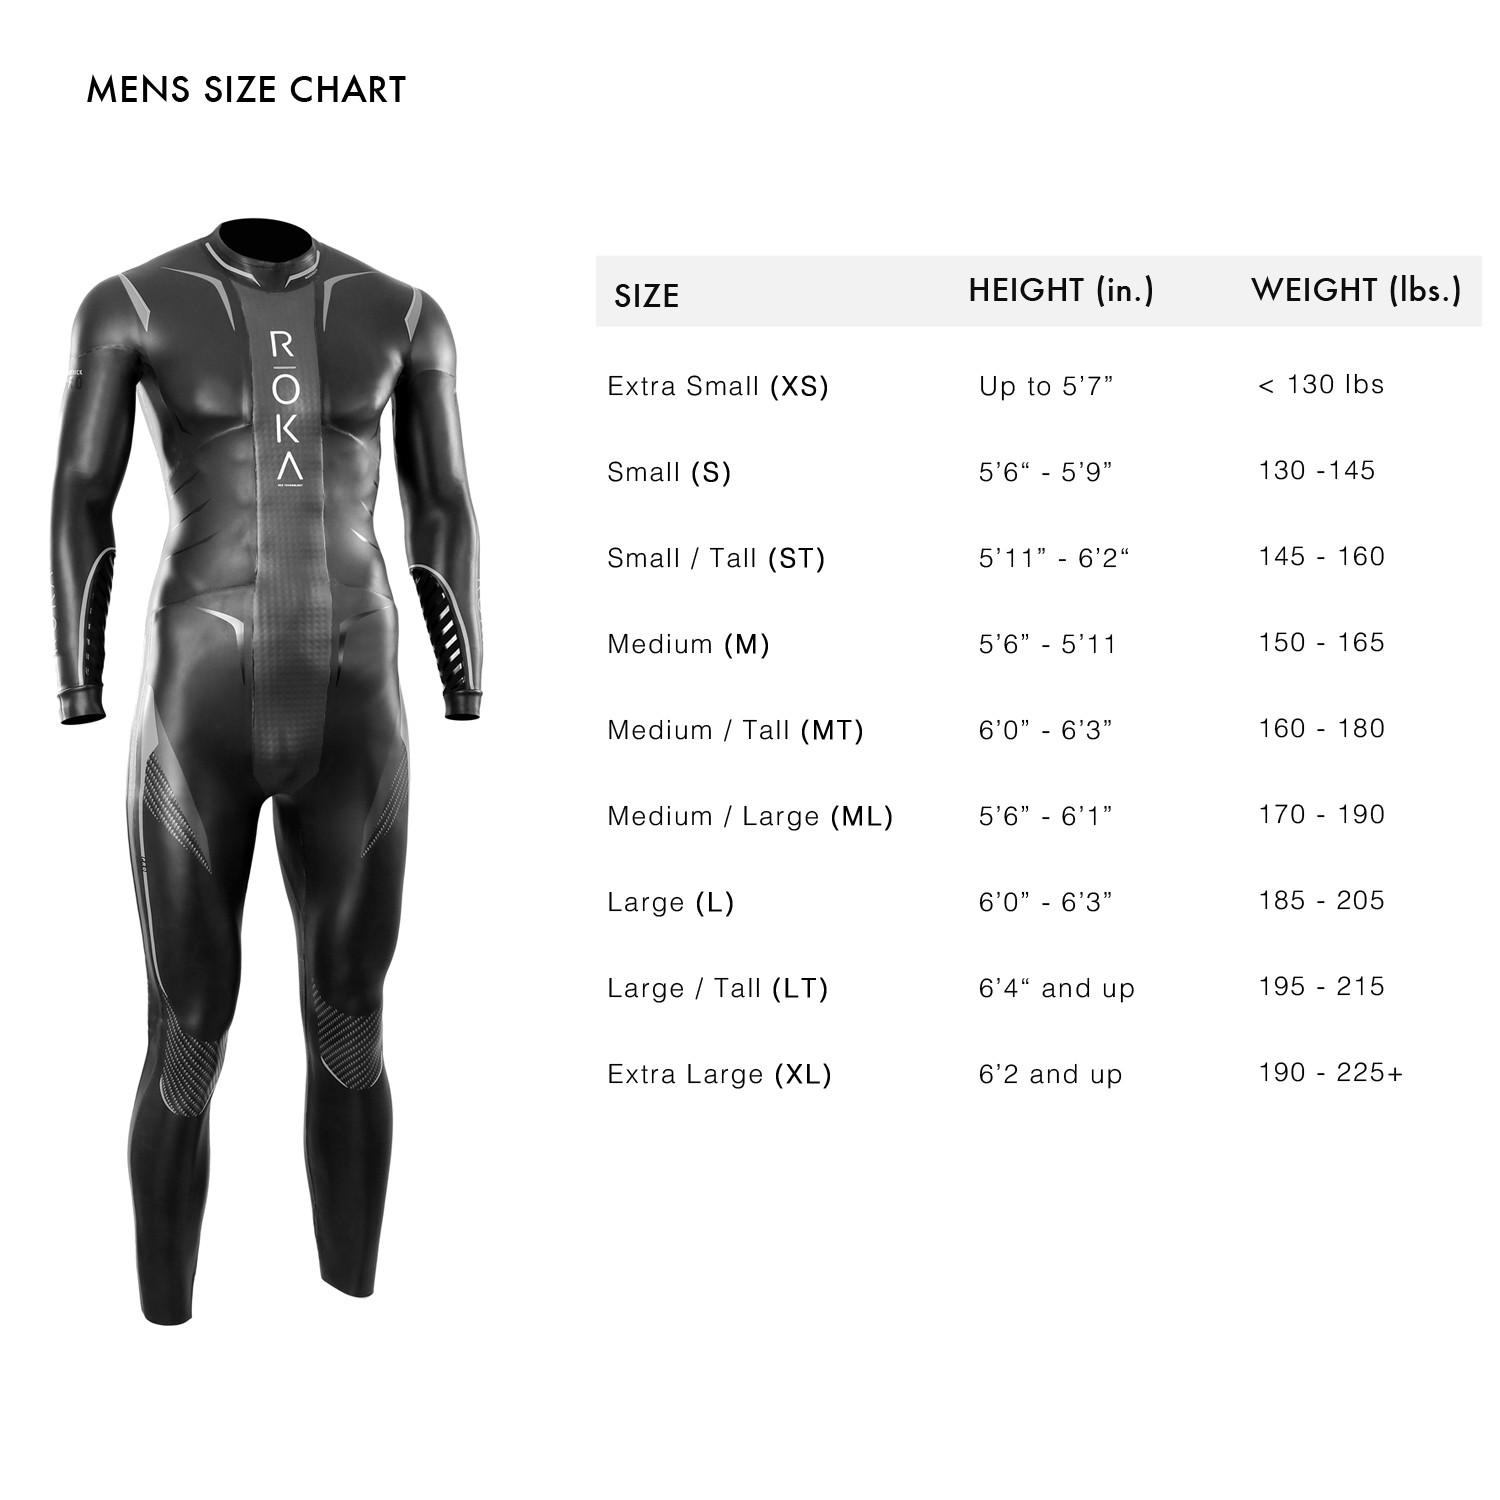 Roka Men S Wetsuit Size Chart